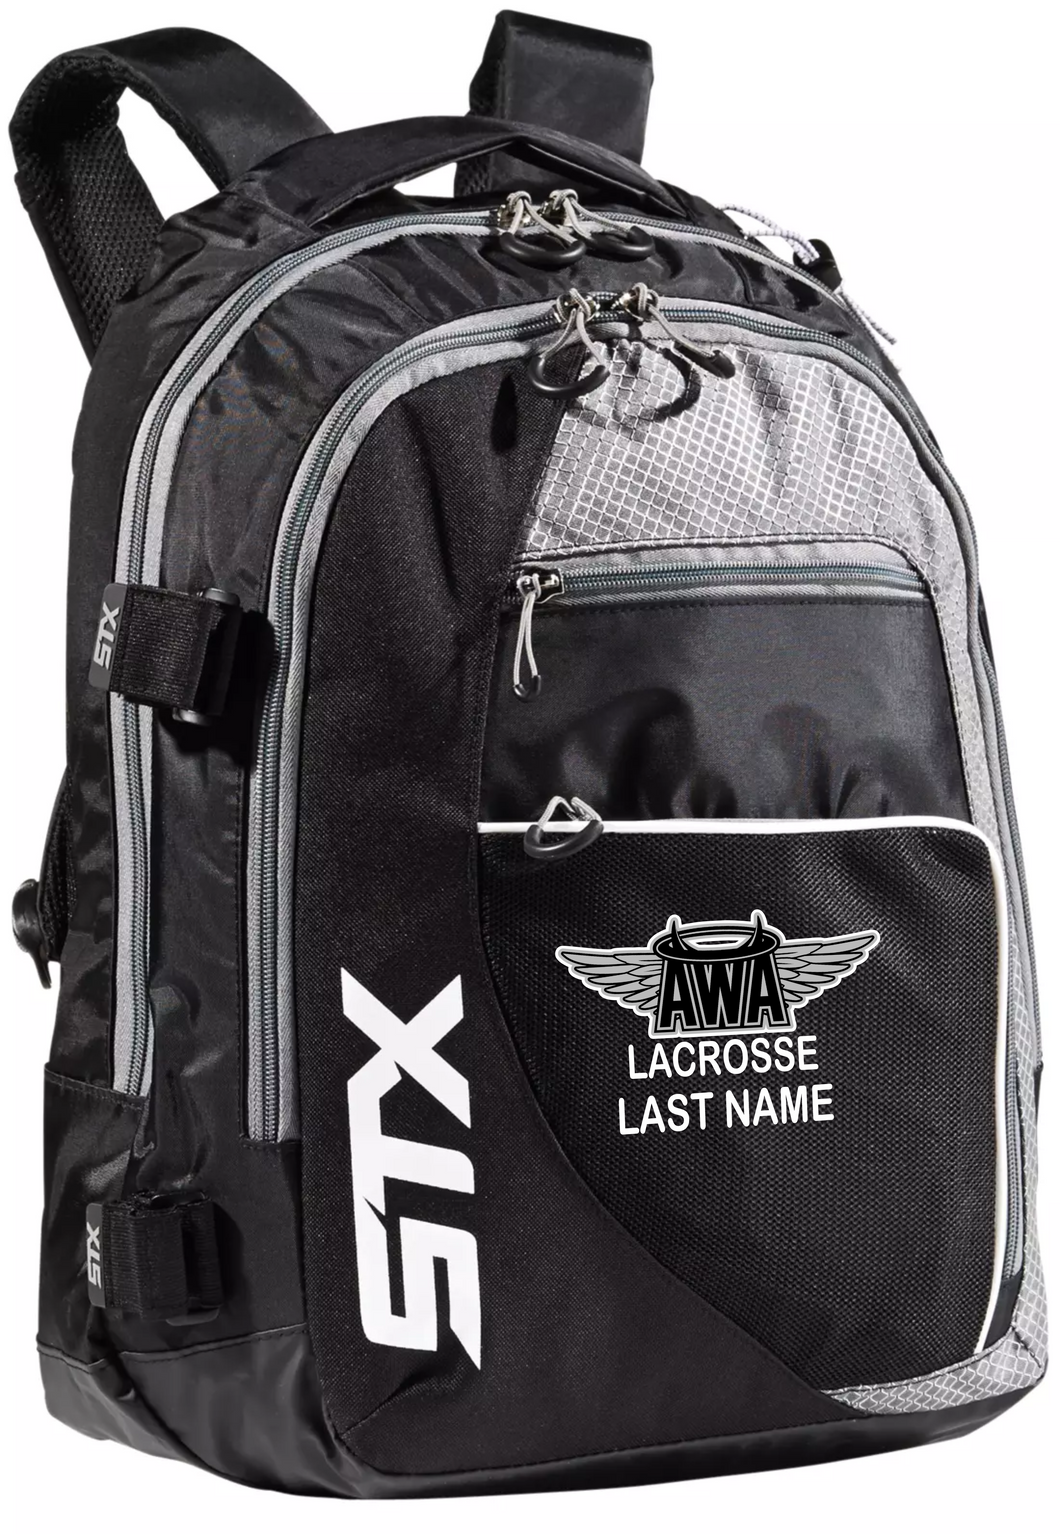 AWA-LAX-955-1 - STX Sidewinder Lacrosse Backpack - AWA Girls Lacrosse Logo & Personalized Player Name